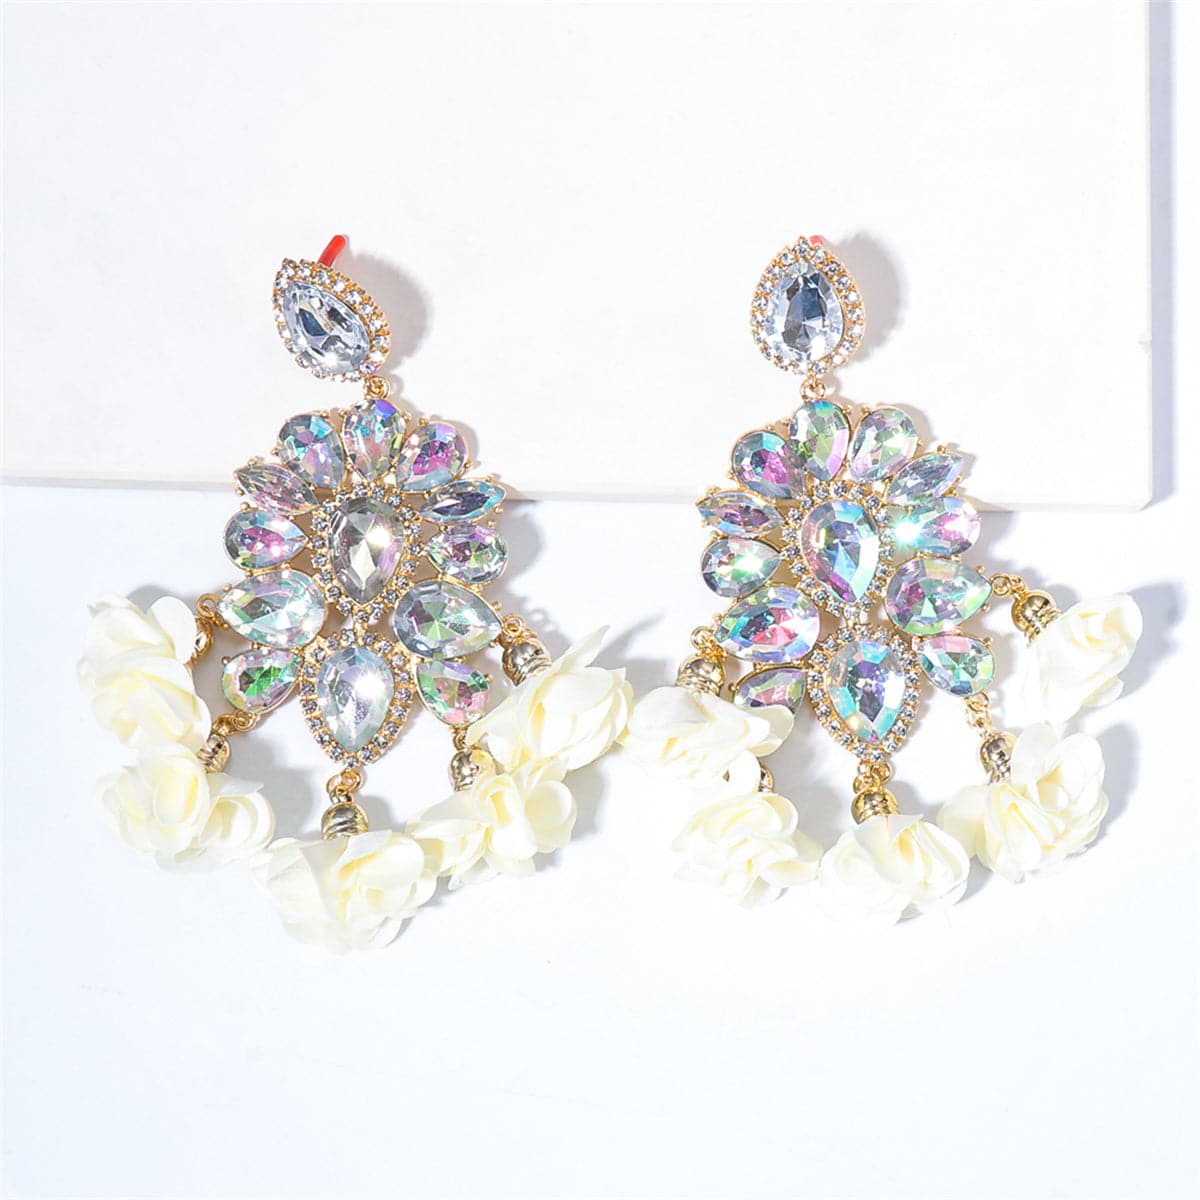 Reflective Crystal & Cubic Zirconia Chandelier Drop Earrings